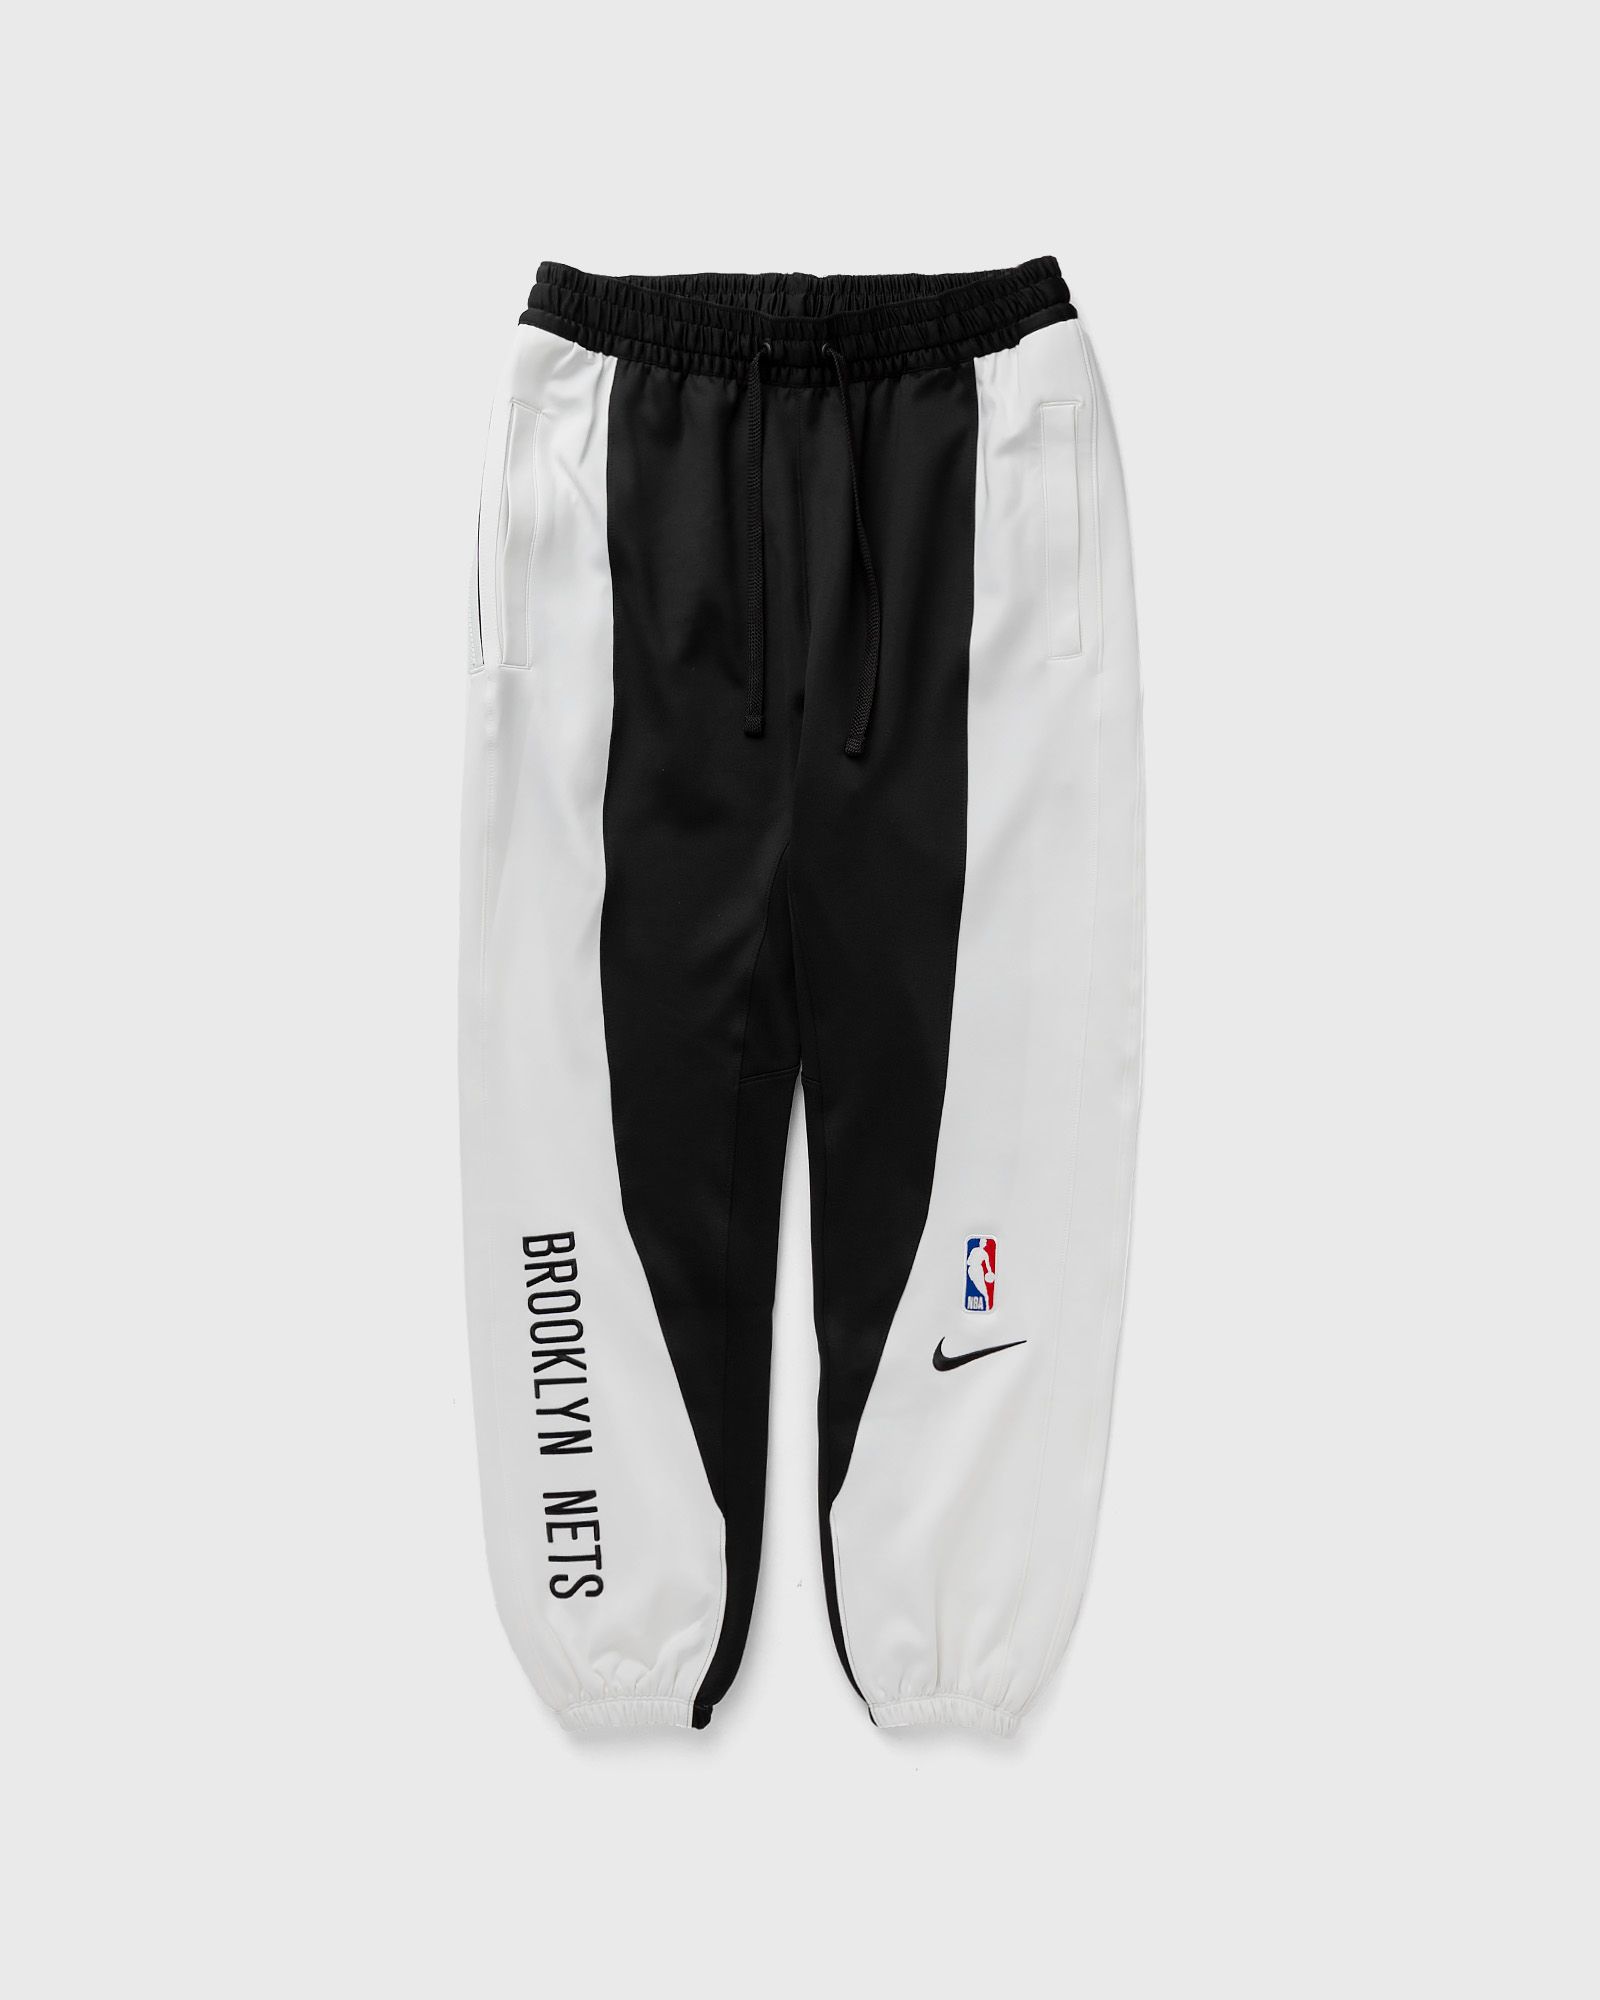 Nike - sportswear premium essentials men's pocket pants men sweatpants black|white in größe:m